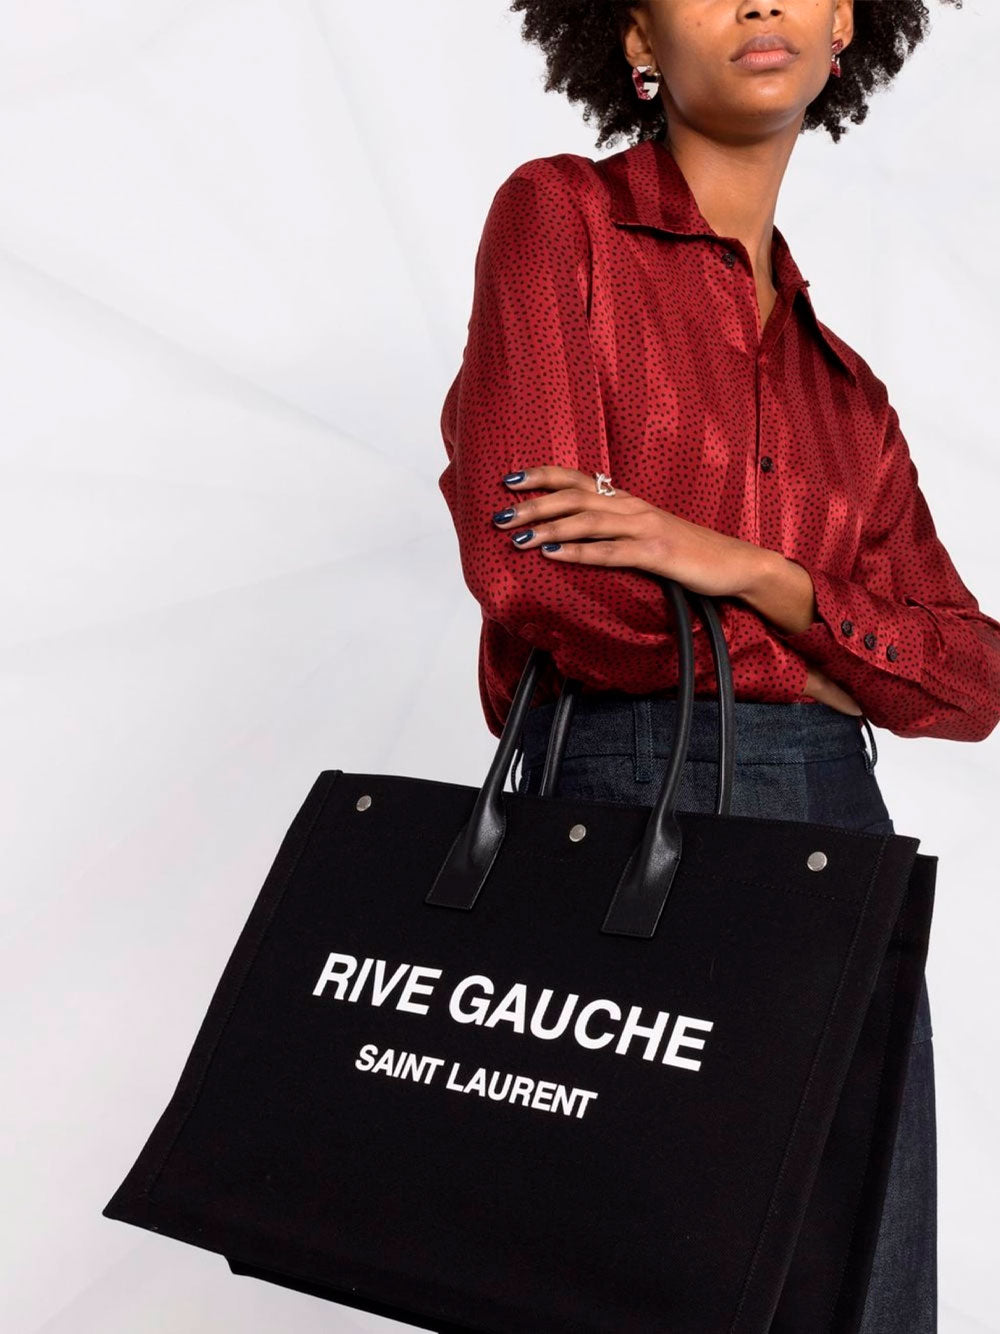 Rive Gauche shopping bag